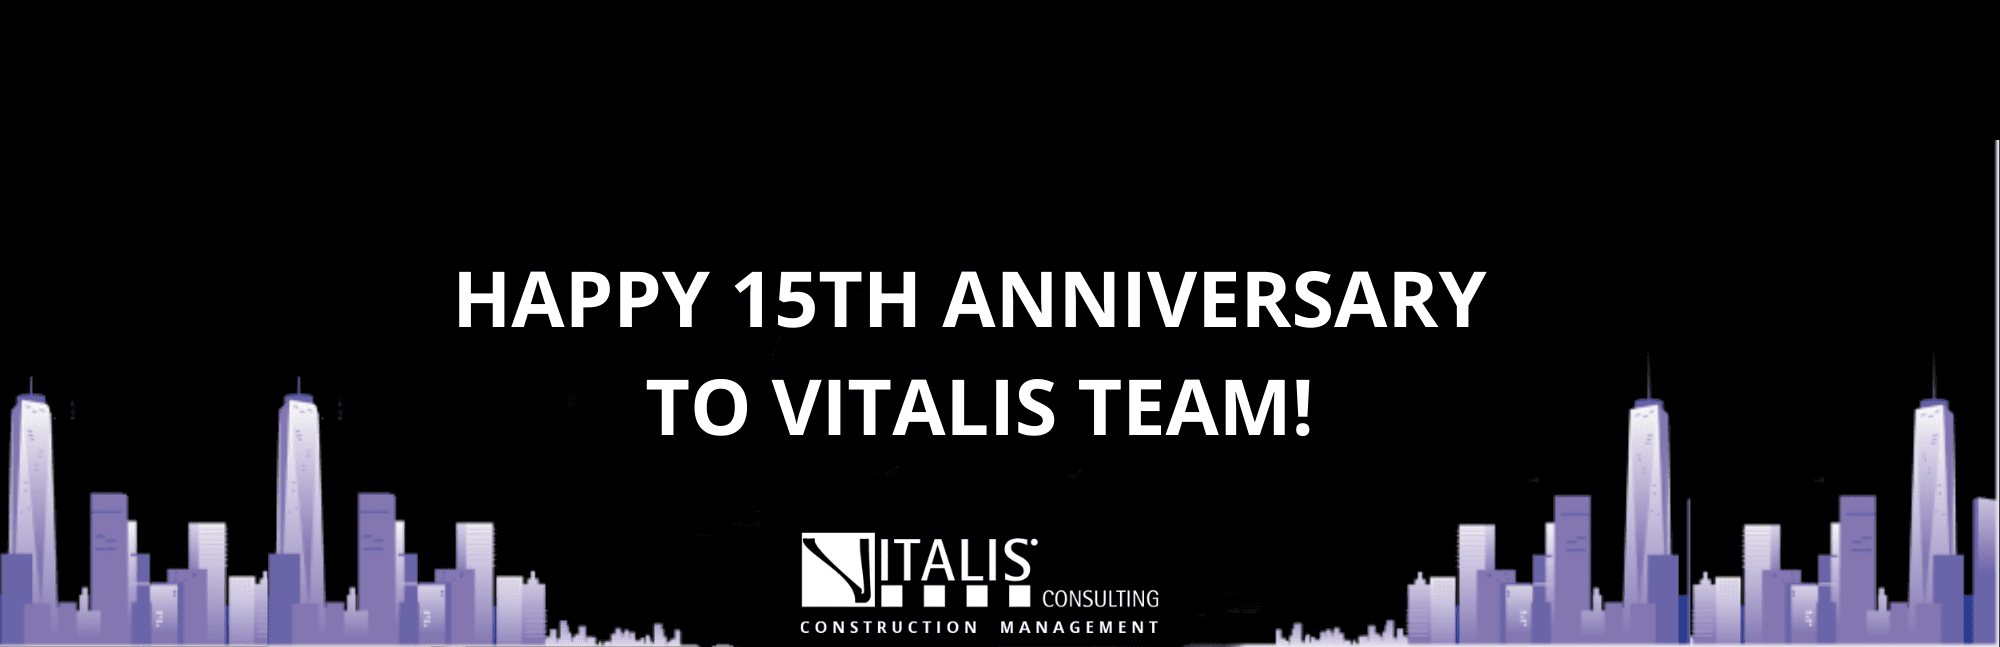 Vitalis team celebrates its 15th anniversary 